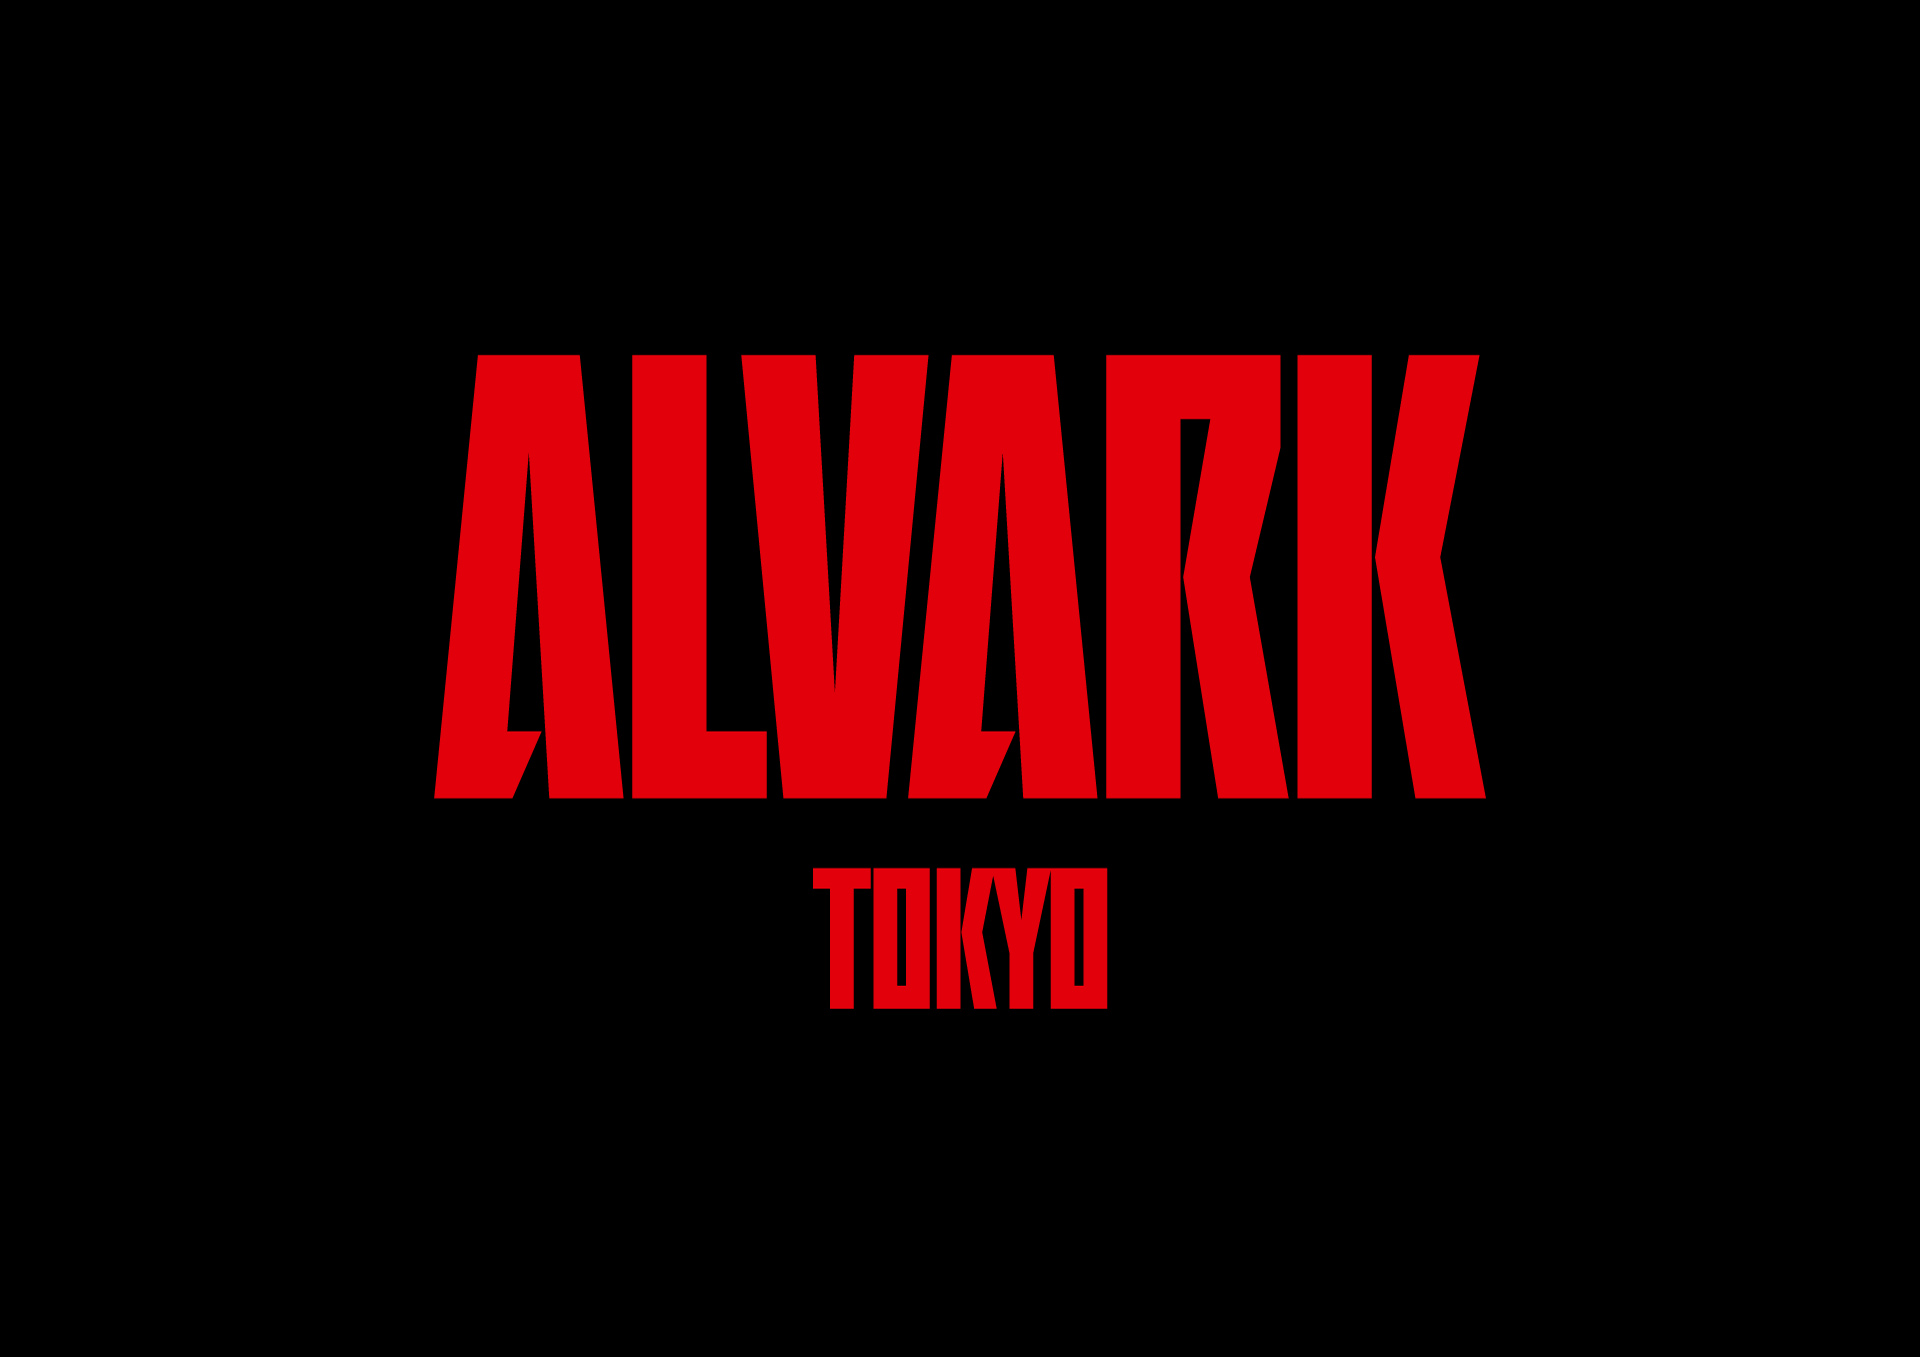 alvark_logo_up